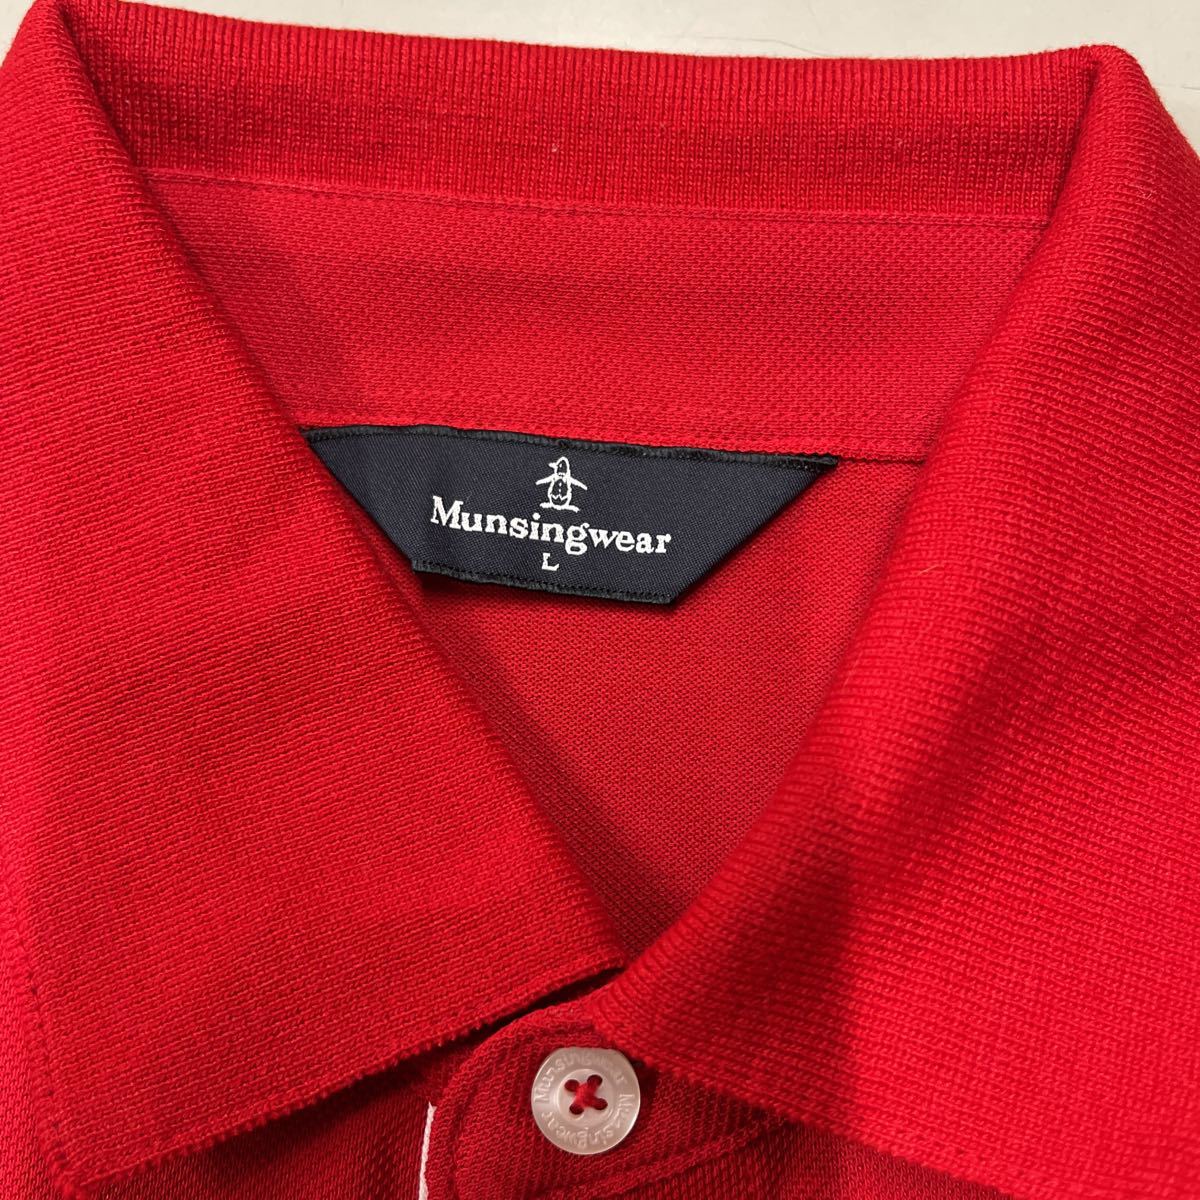 Munsingwear マンシングウェア 半袖シャツ ポロシャツ サイズL レッド 赤 メンズ トップス 日本製 MADE IN JAPAN デサント ゴルフ golfの画像3